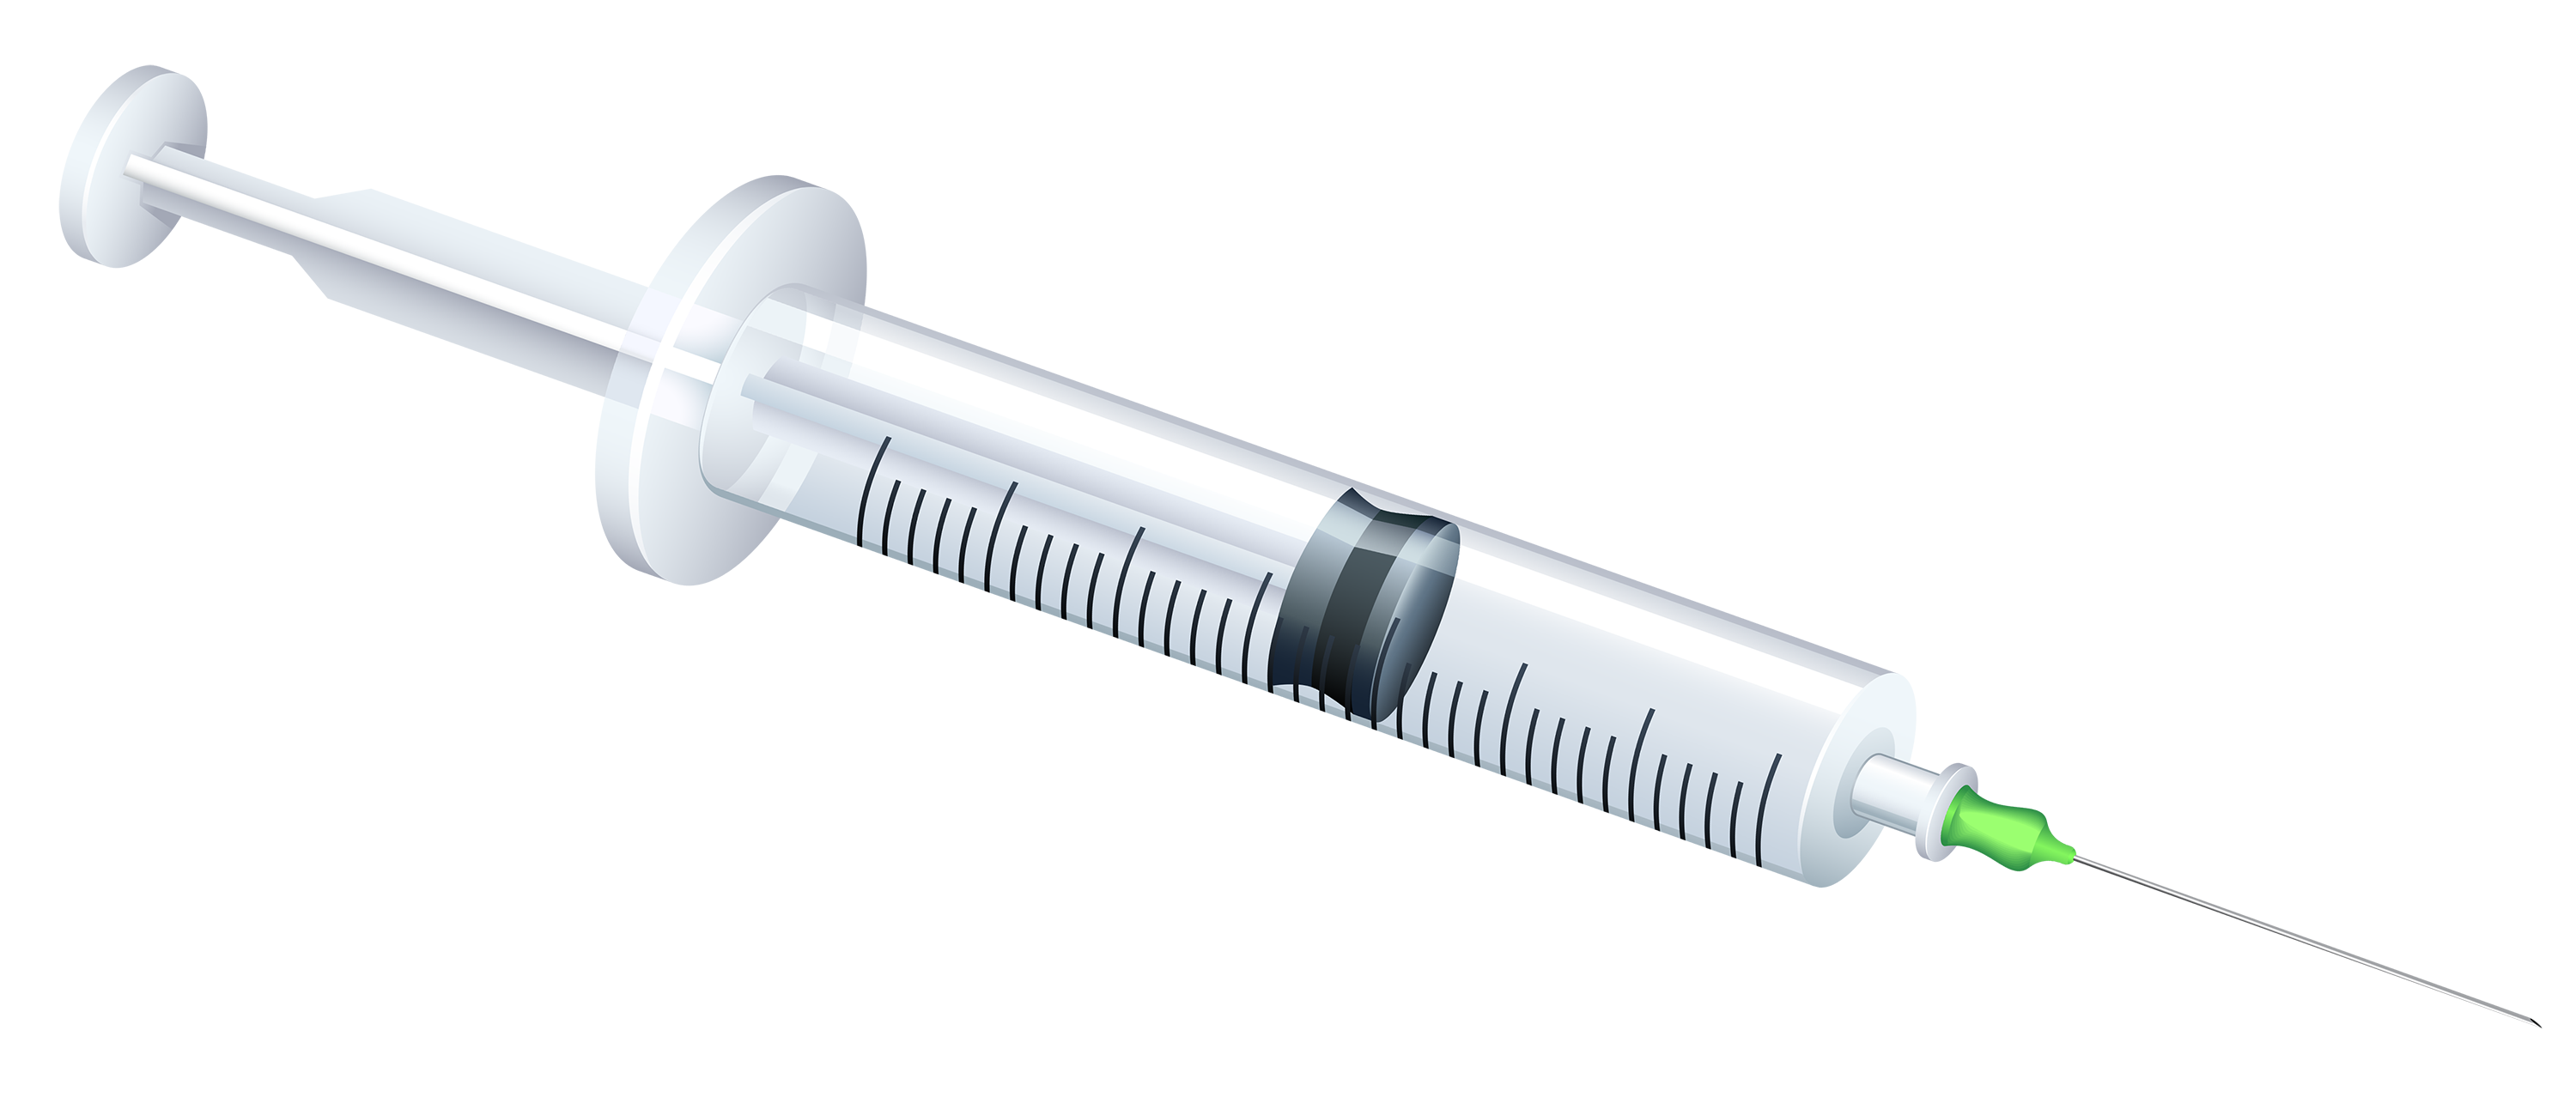 Syringe png best web. Needle clipart medical